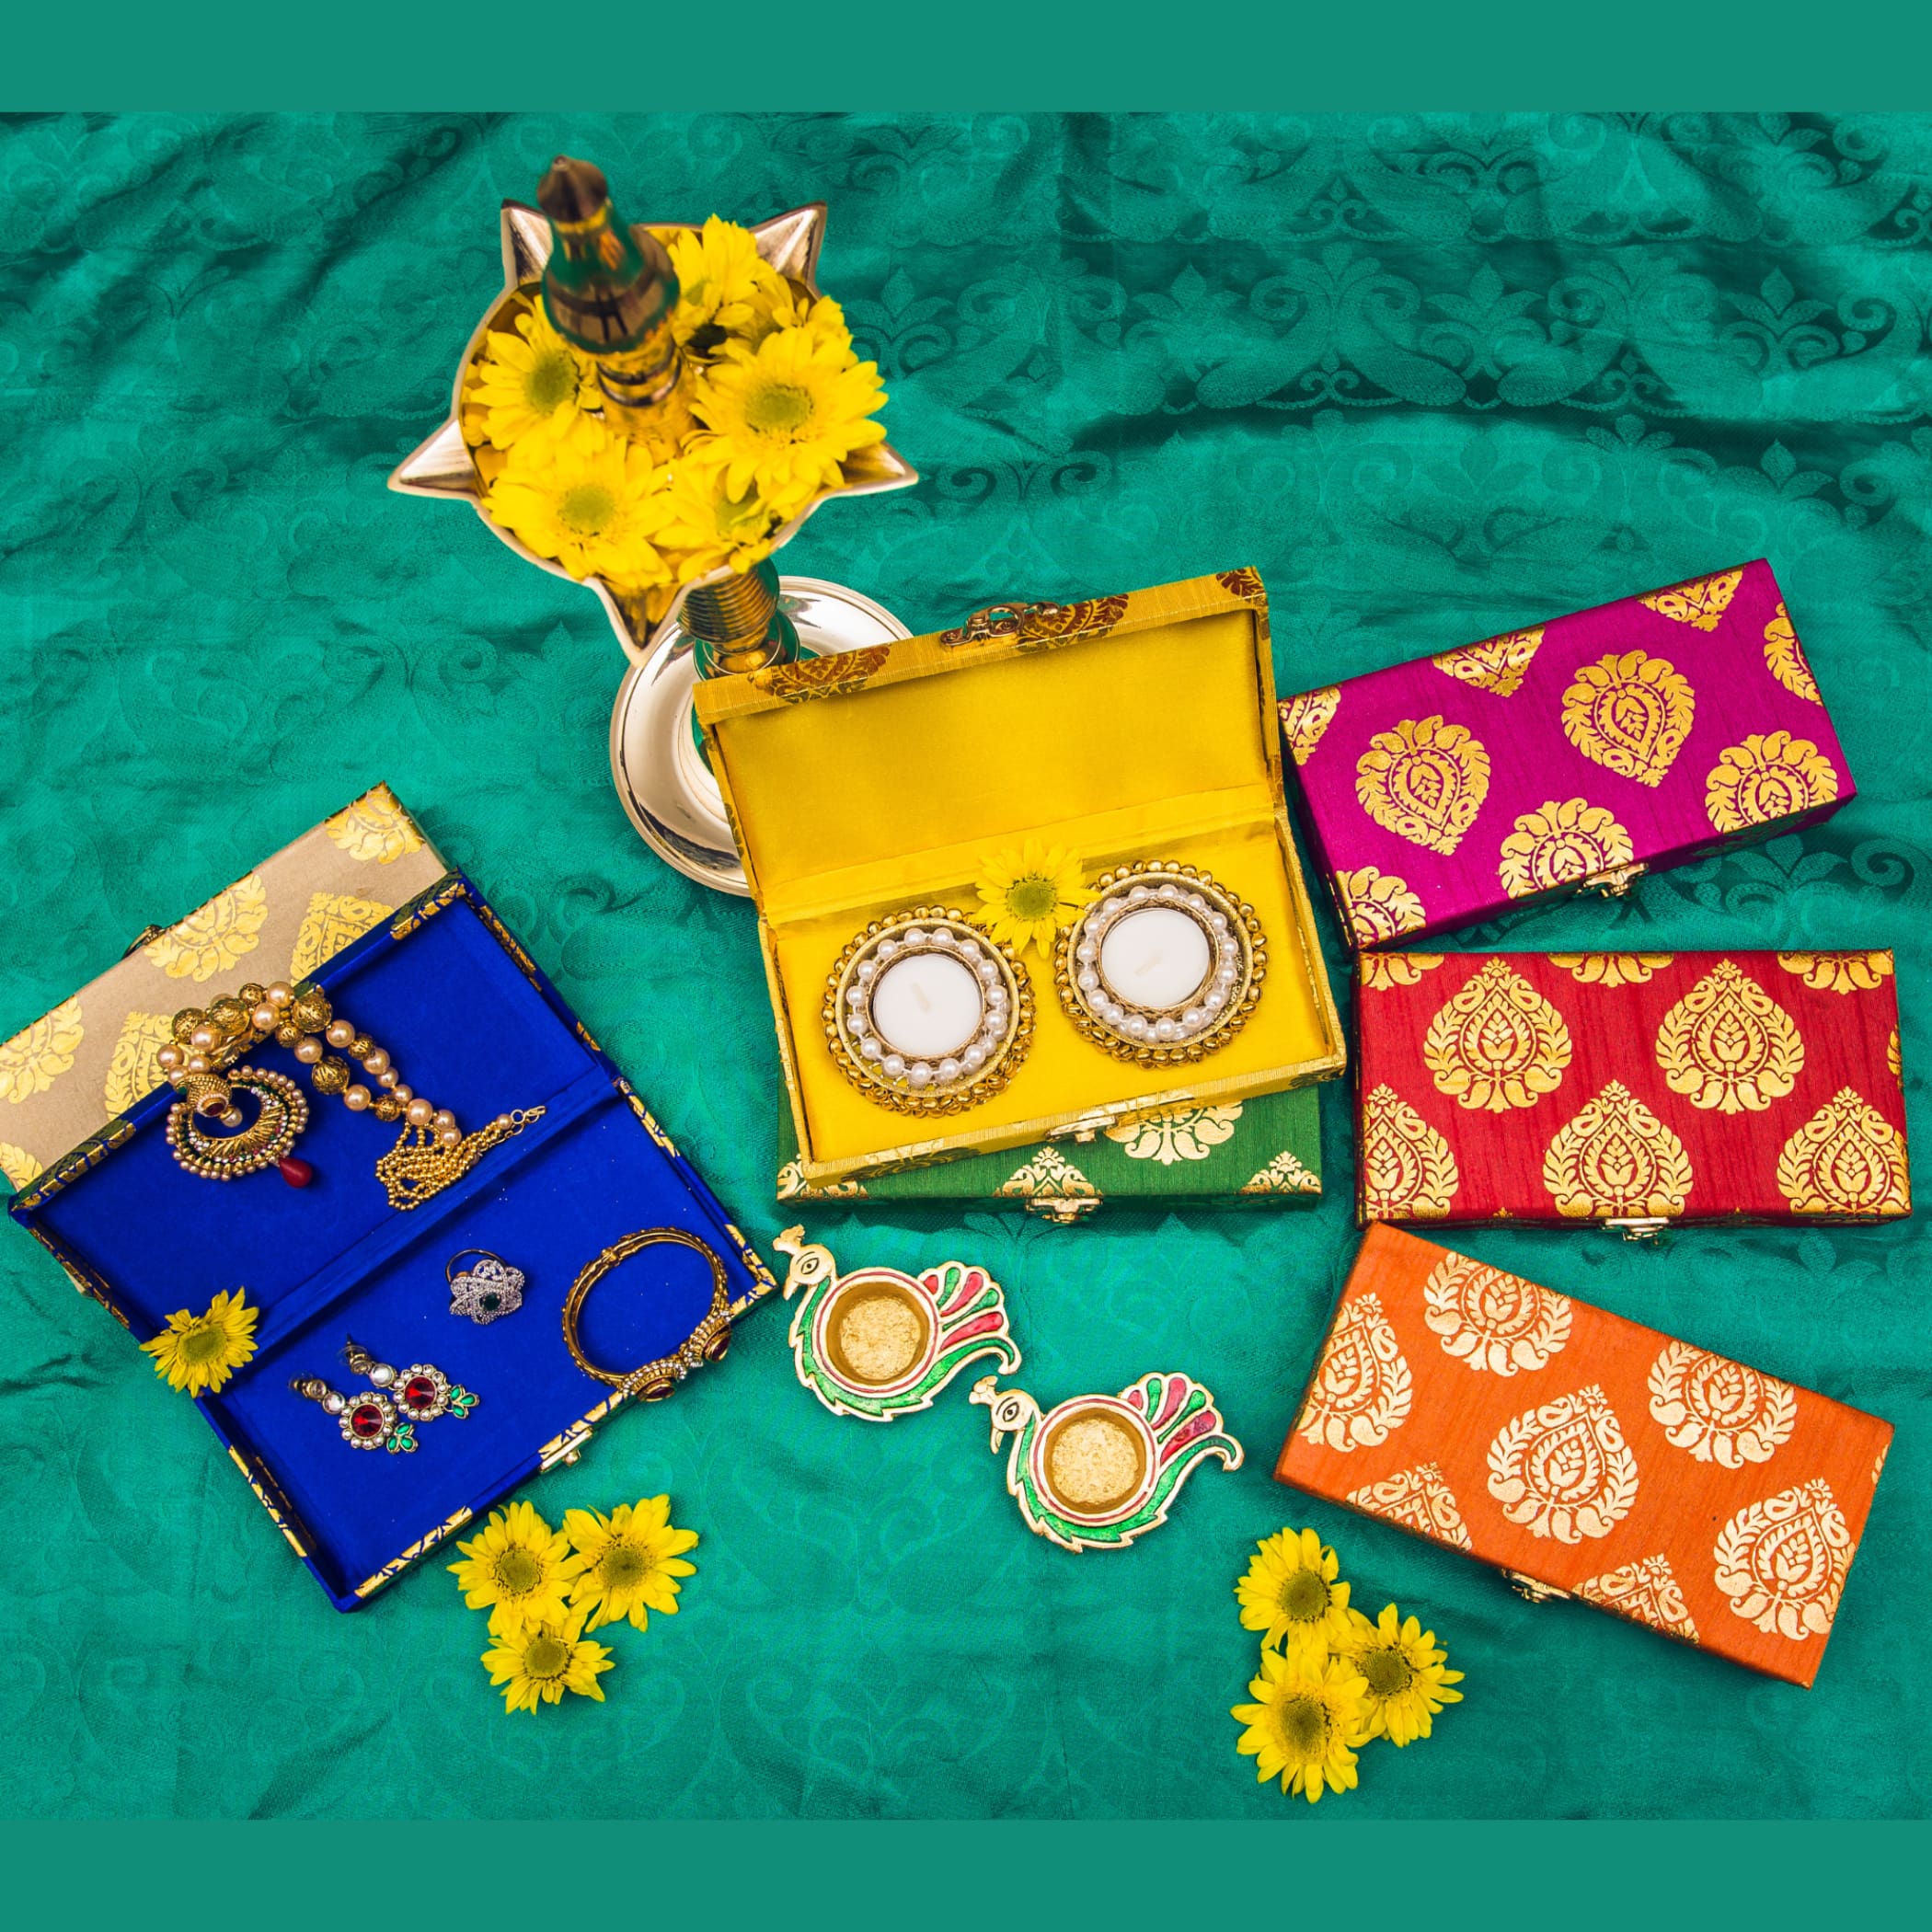 4 Pcs Brocade Jewelry Travel Organizer Box Gift Boxes Favor for Indian Muslim Pakistani Punjabi Wedding, Nikah Favor, Mehndi Favors, Gifts